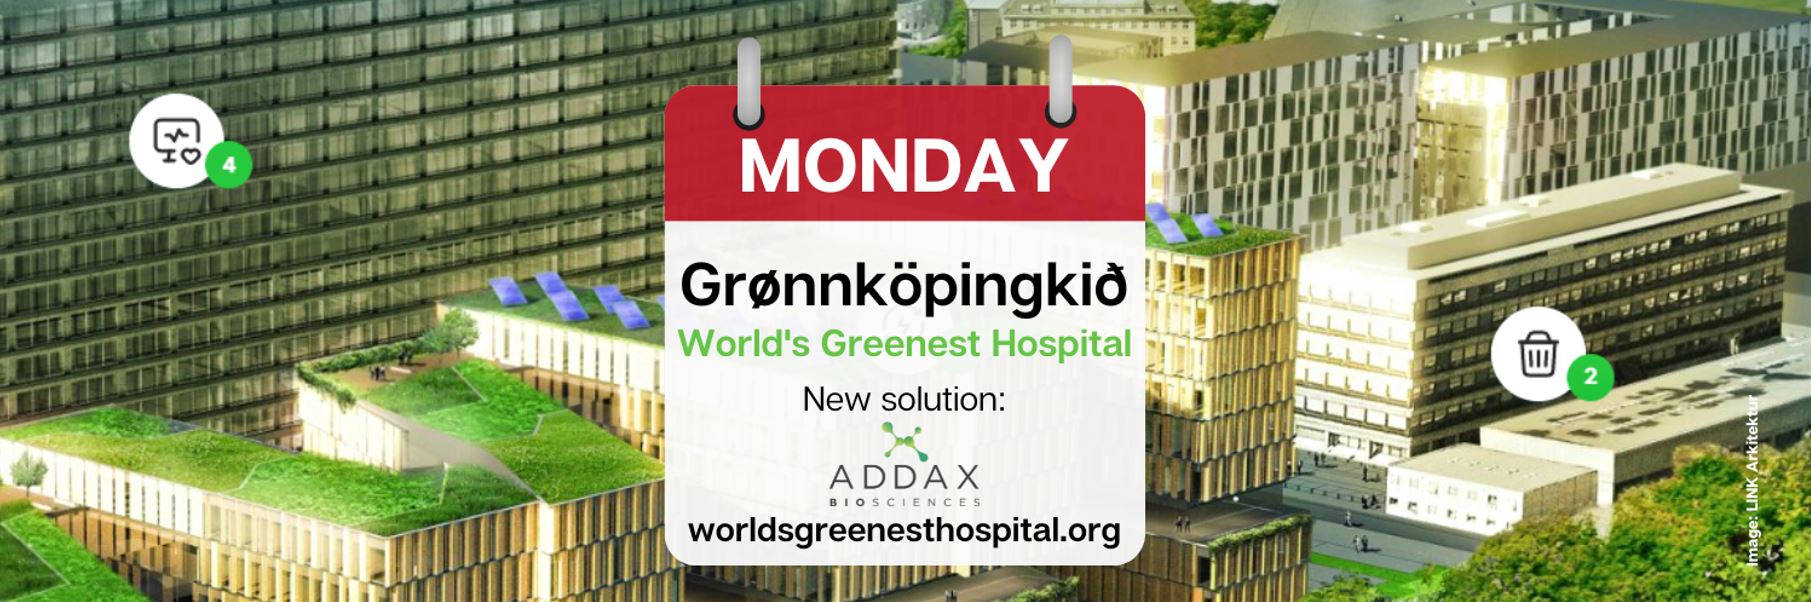 Grønnköpingkið Monday: New Solution From Addax Biosciences